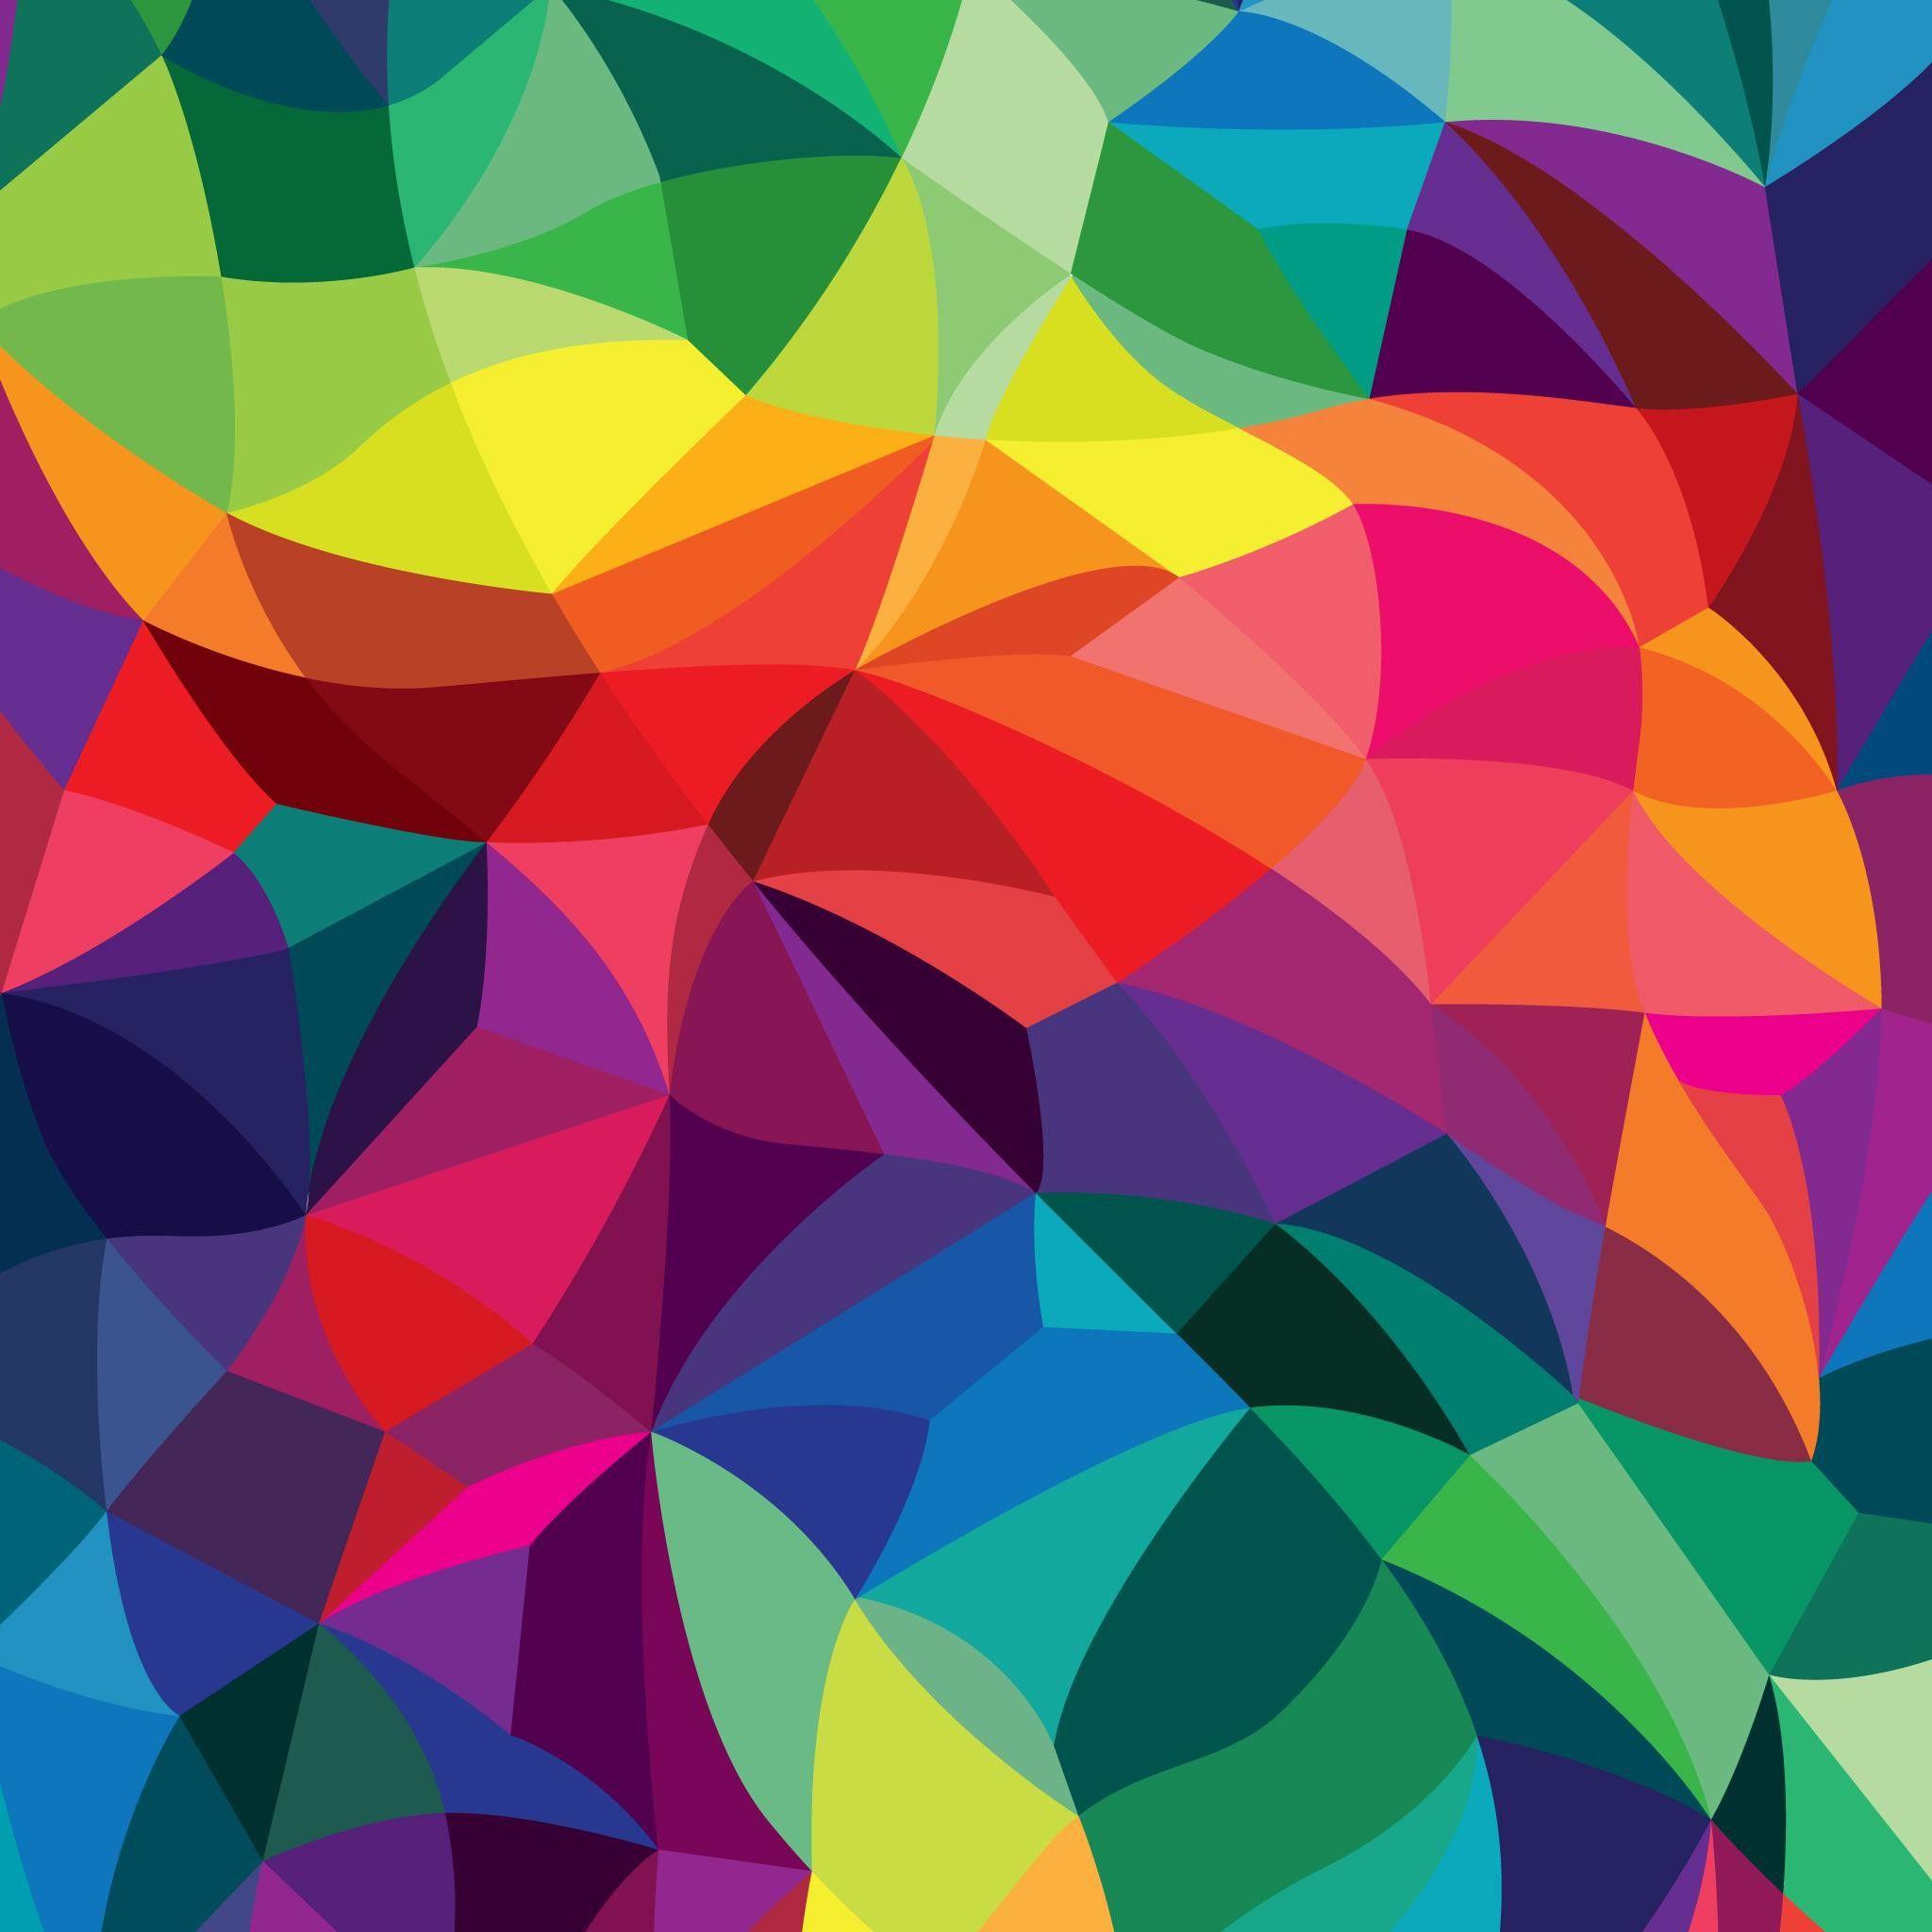 IOS7 #Colorful #wallpaper for #iPad retina